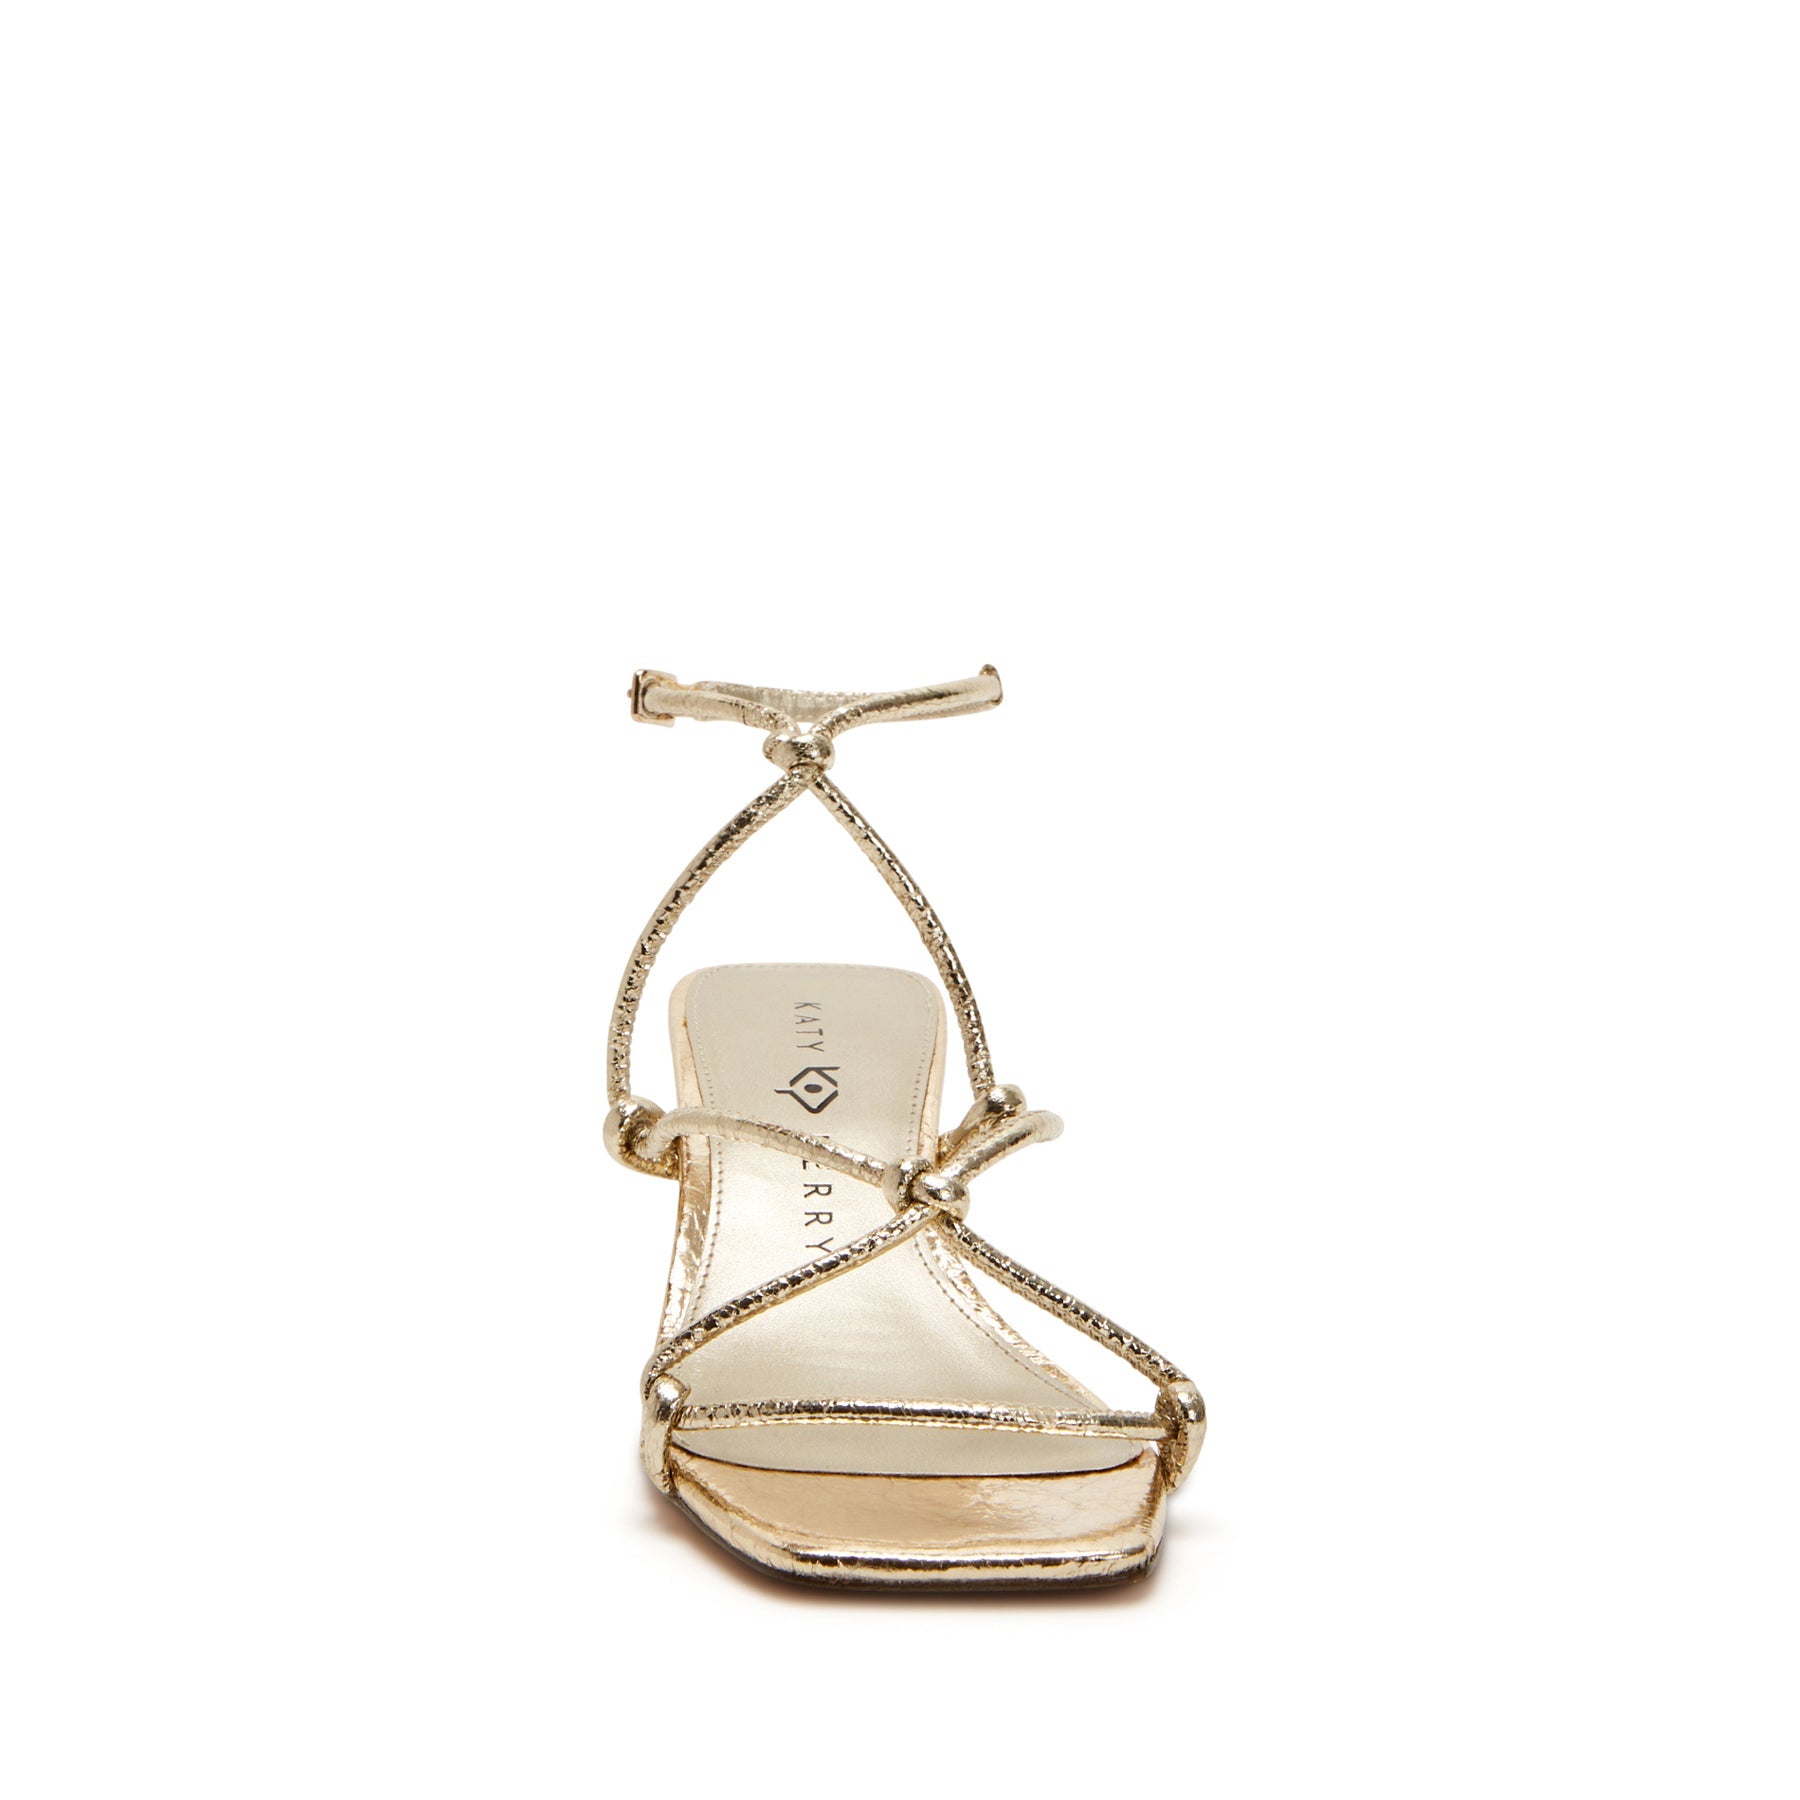 Luxury women's shoes - Bottega Veneta Stretch sandals in gold